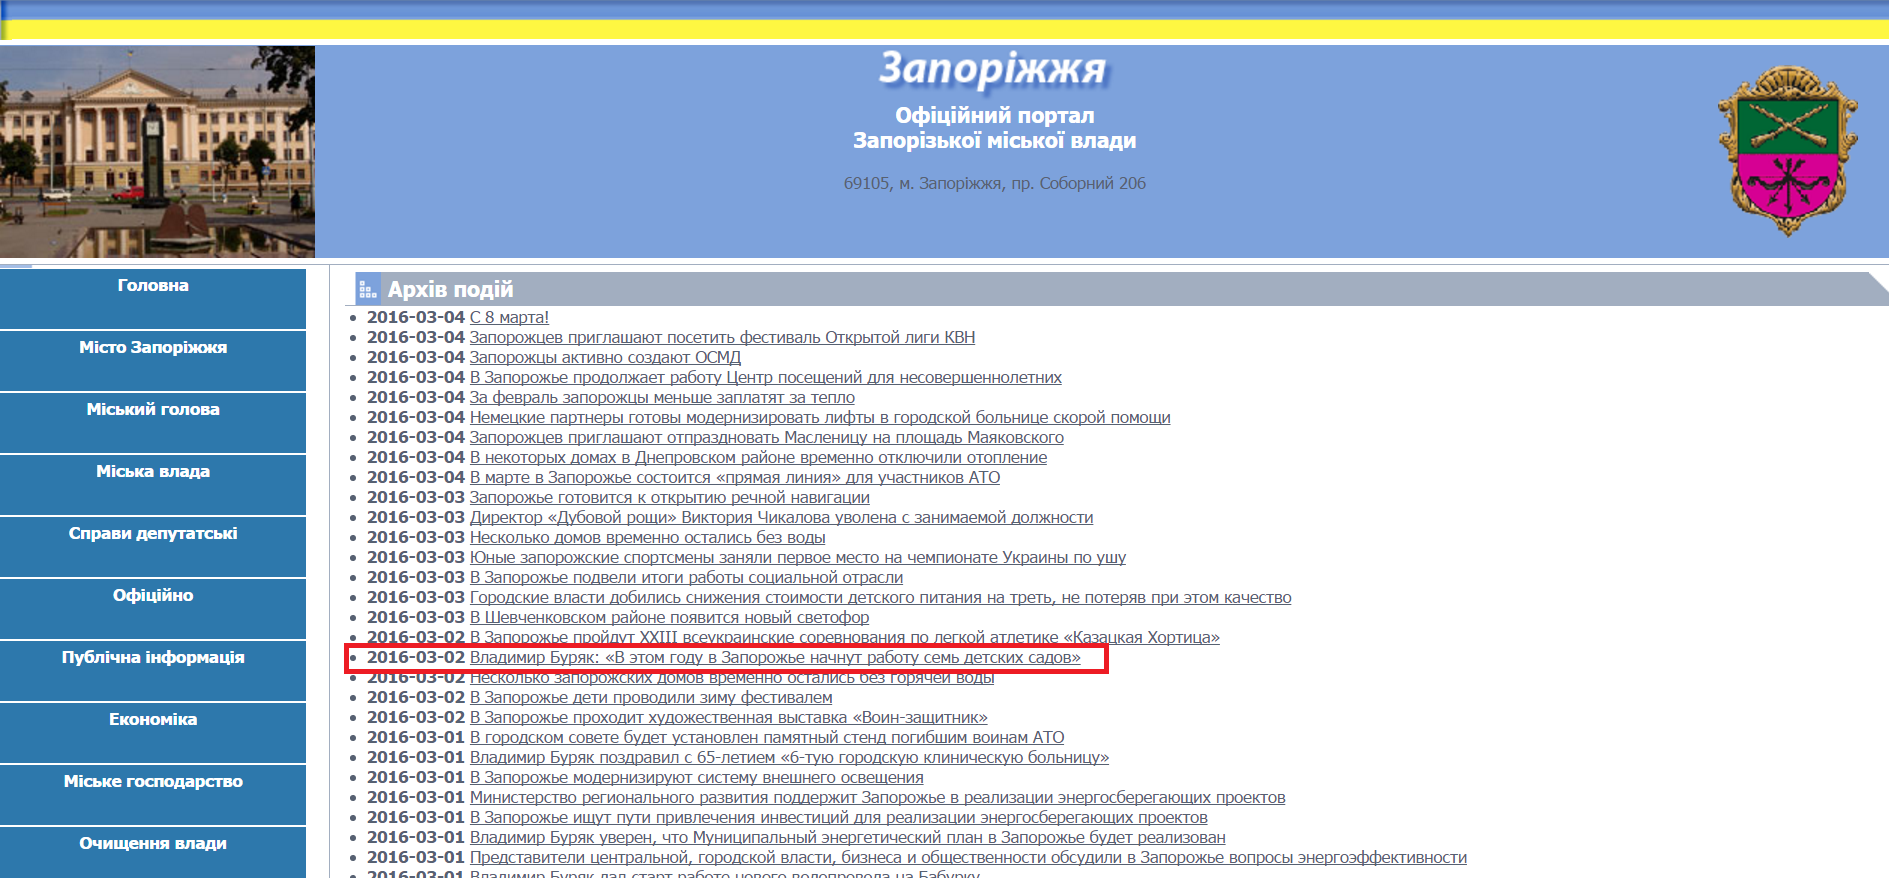 http://meriazp.gov.ua/test/index.php?id=20